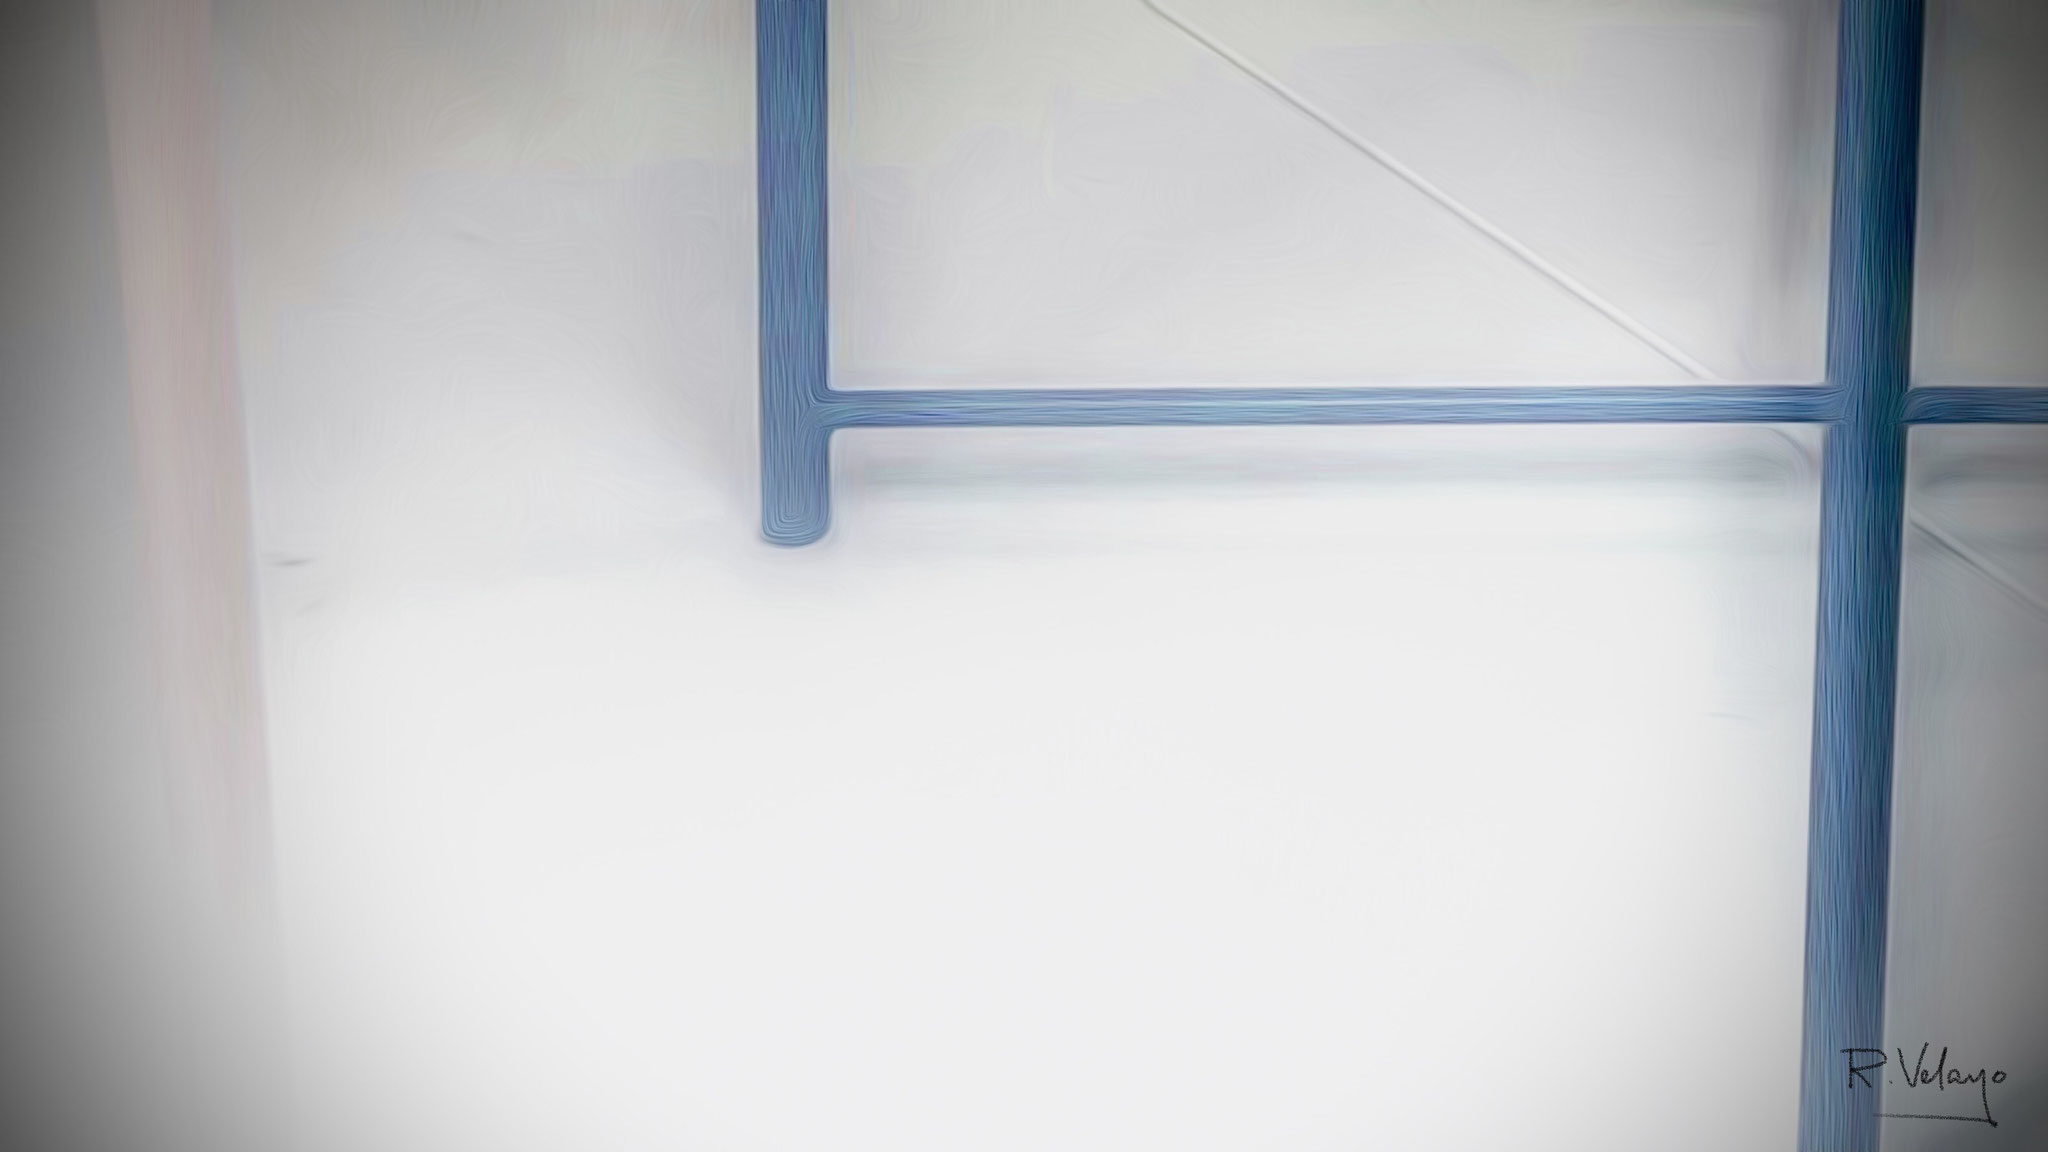 "LEGS OF AN IKEA METAL SIDE TABLE" [Created: 3/05/2022]